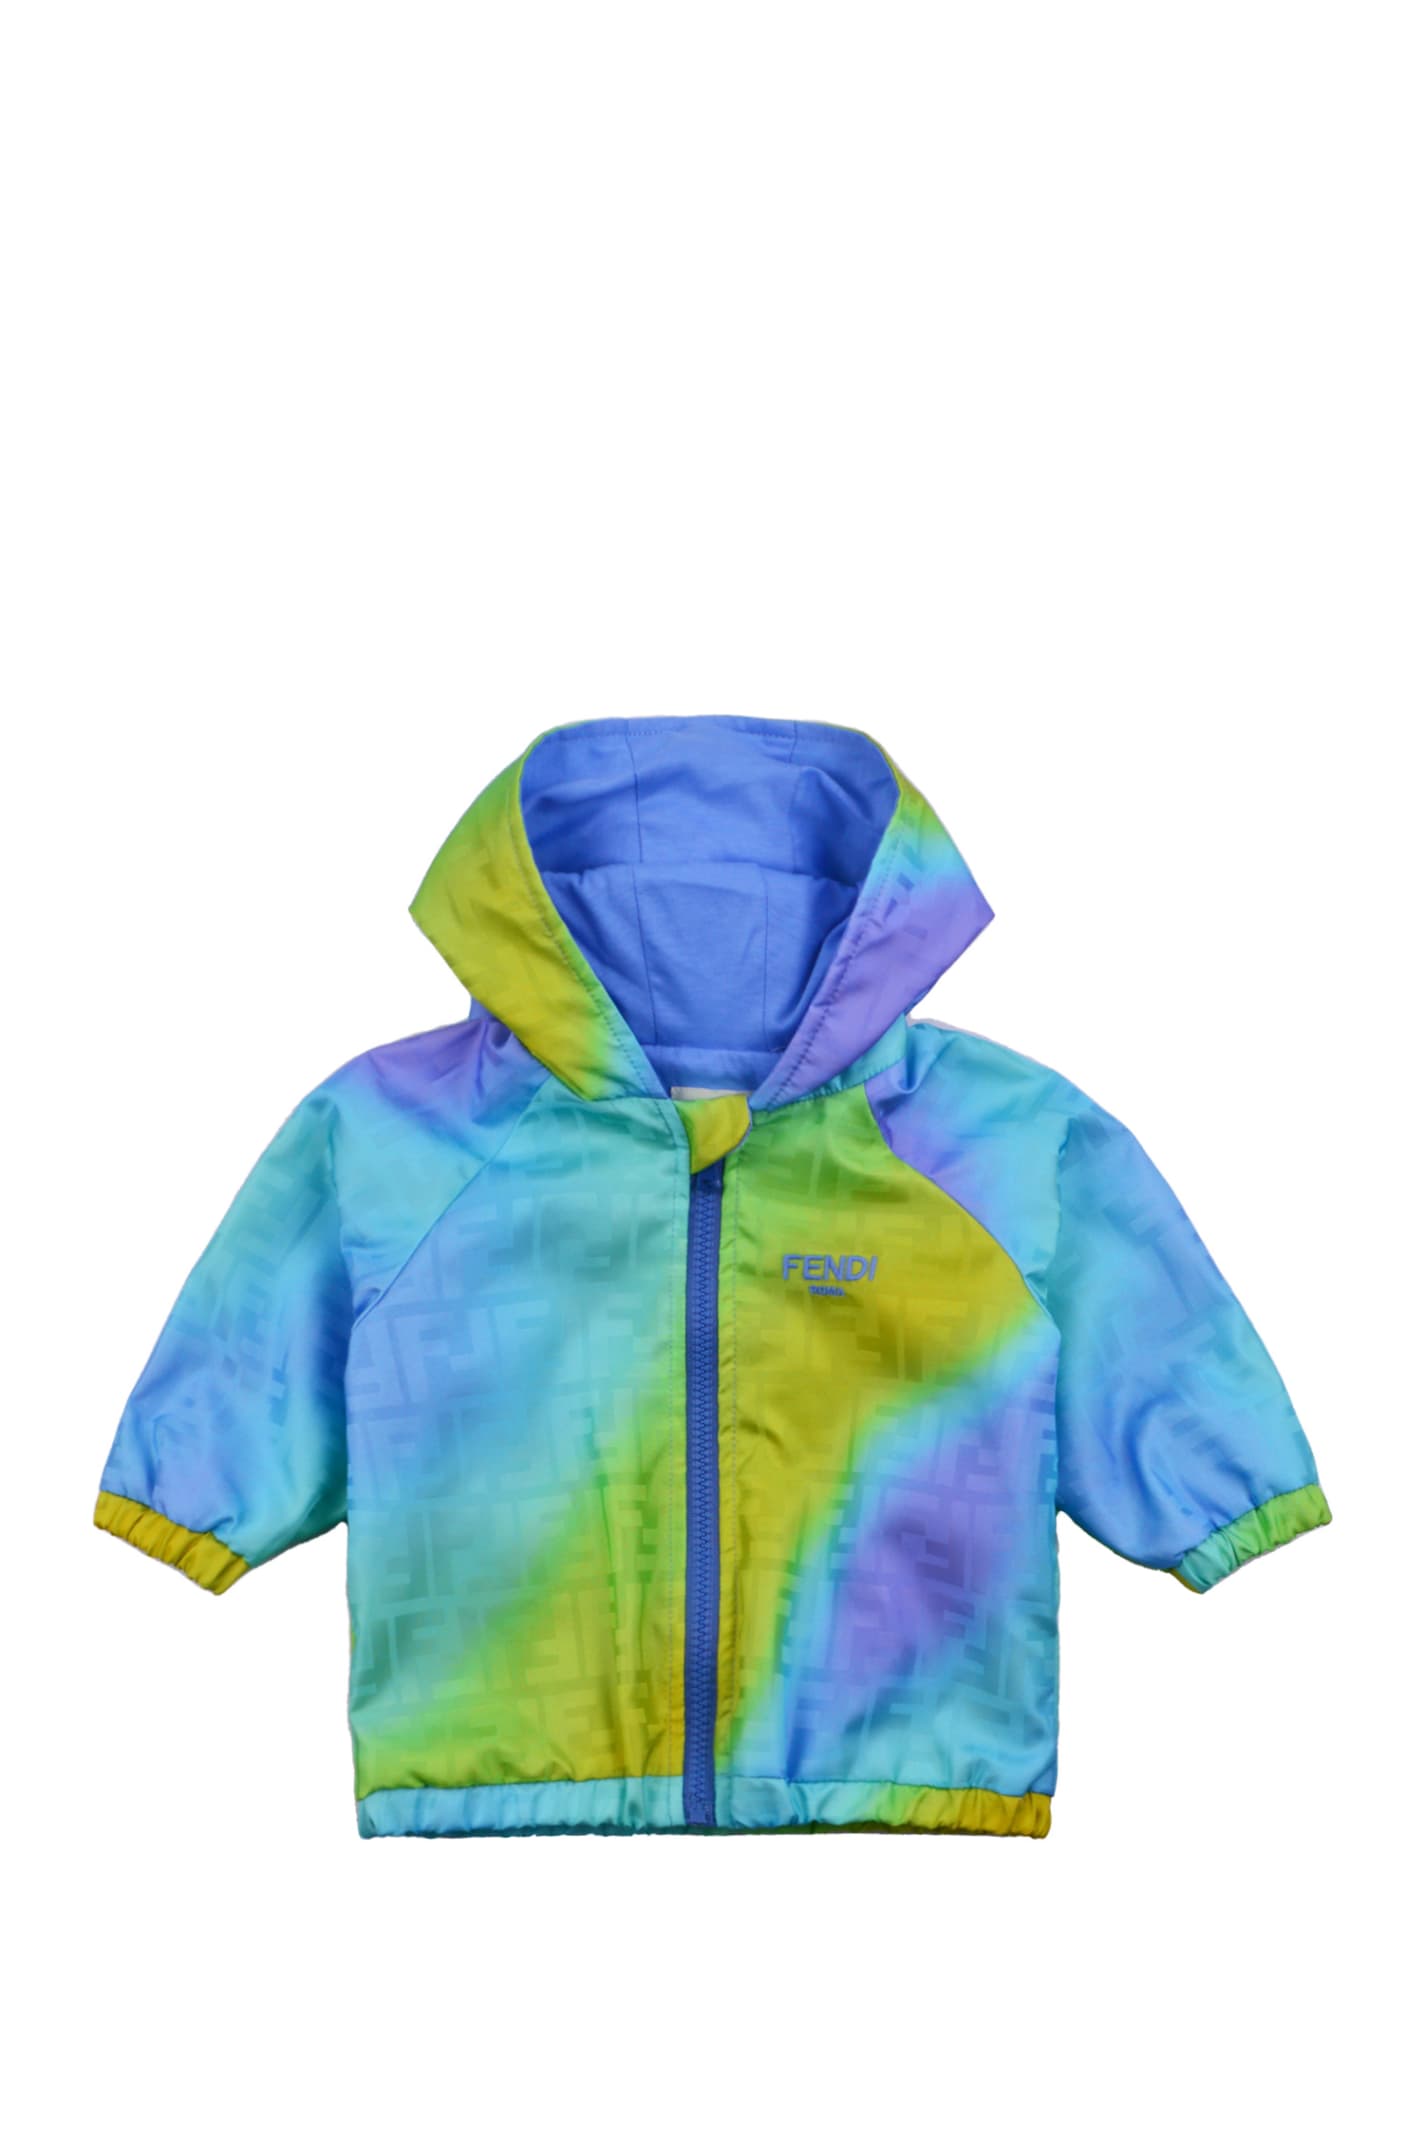 Fendi Kids' Nylon Jacket With Hood In Multicolor